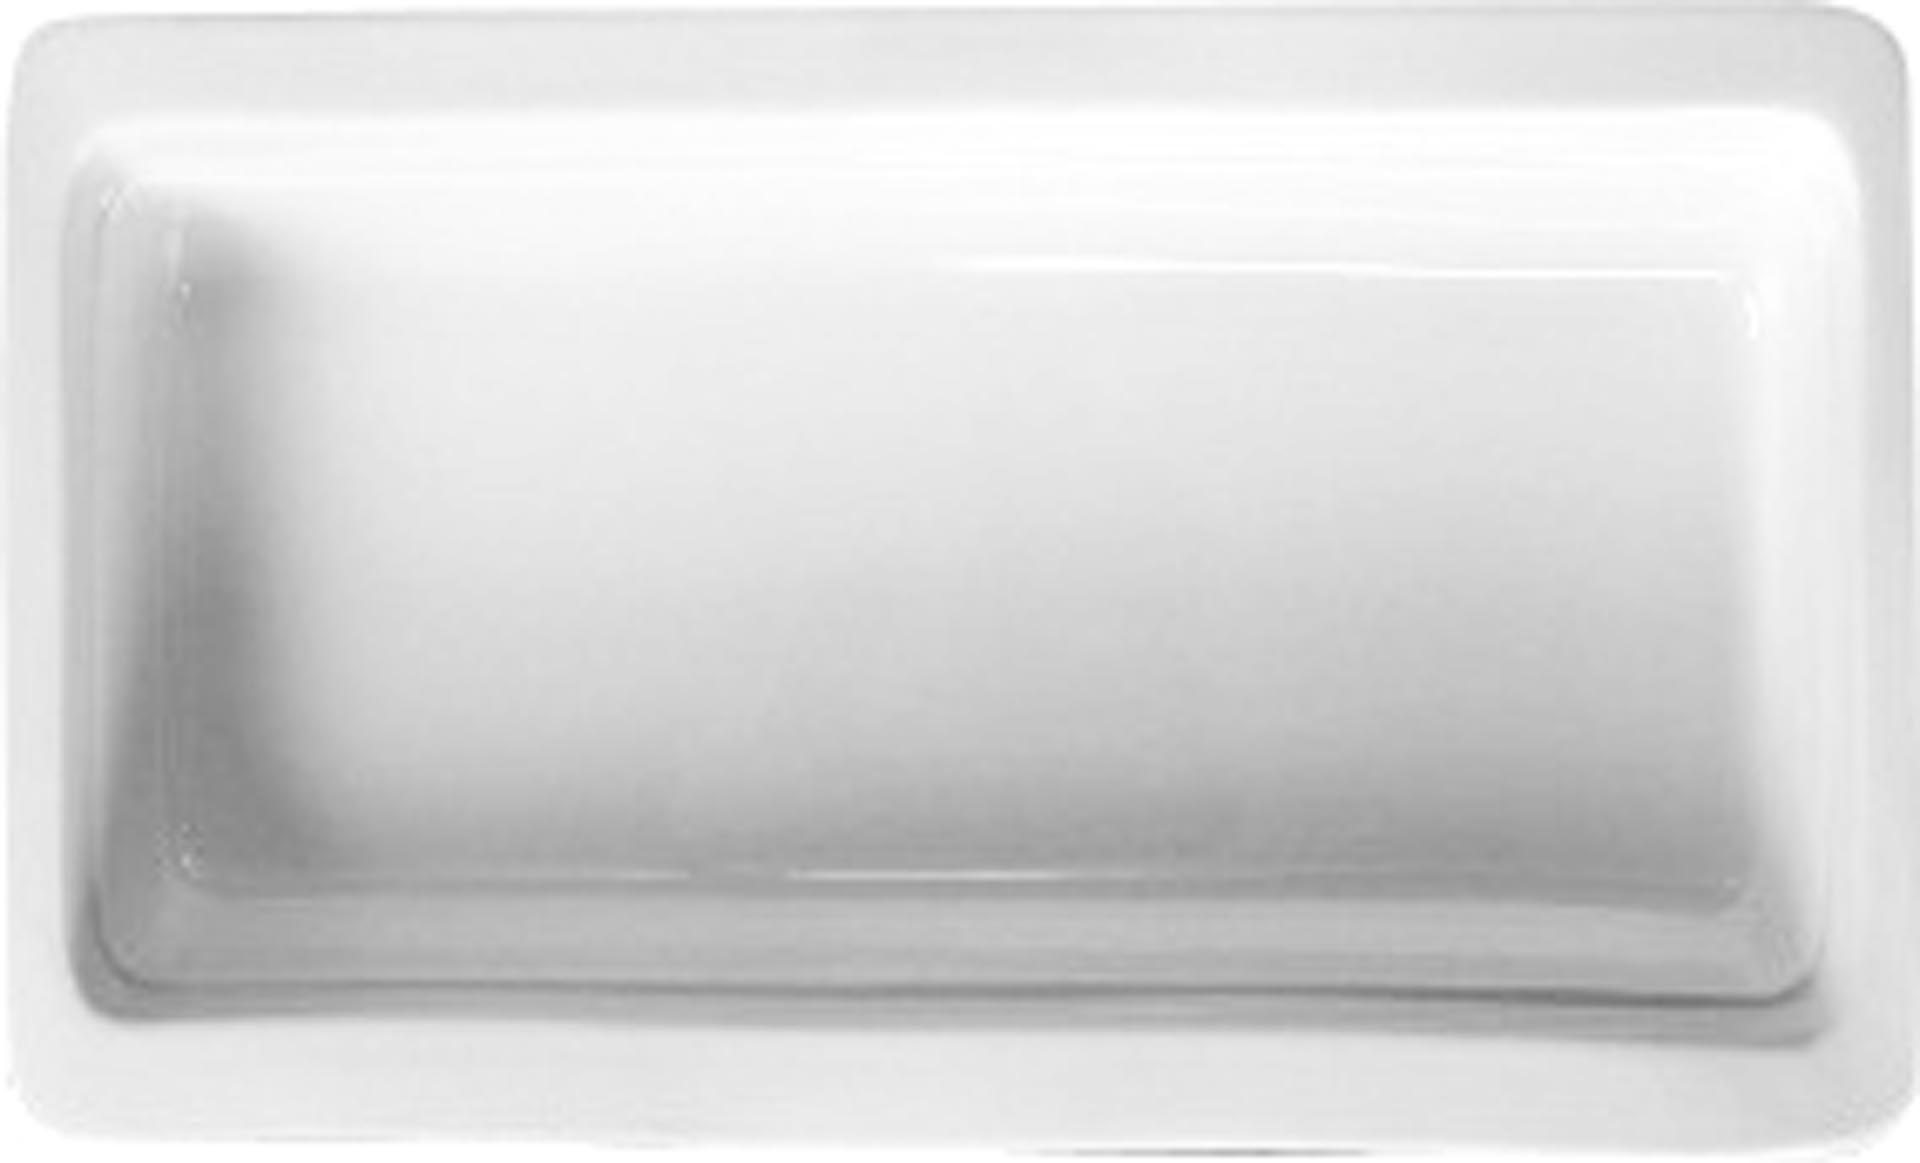 GN-Behälter Porzellan 1/4 65mm tief